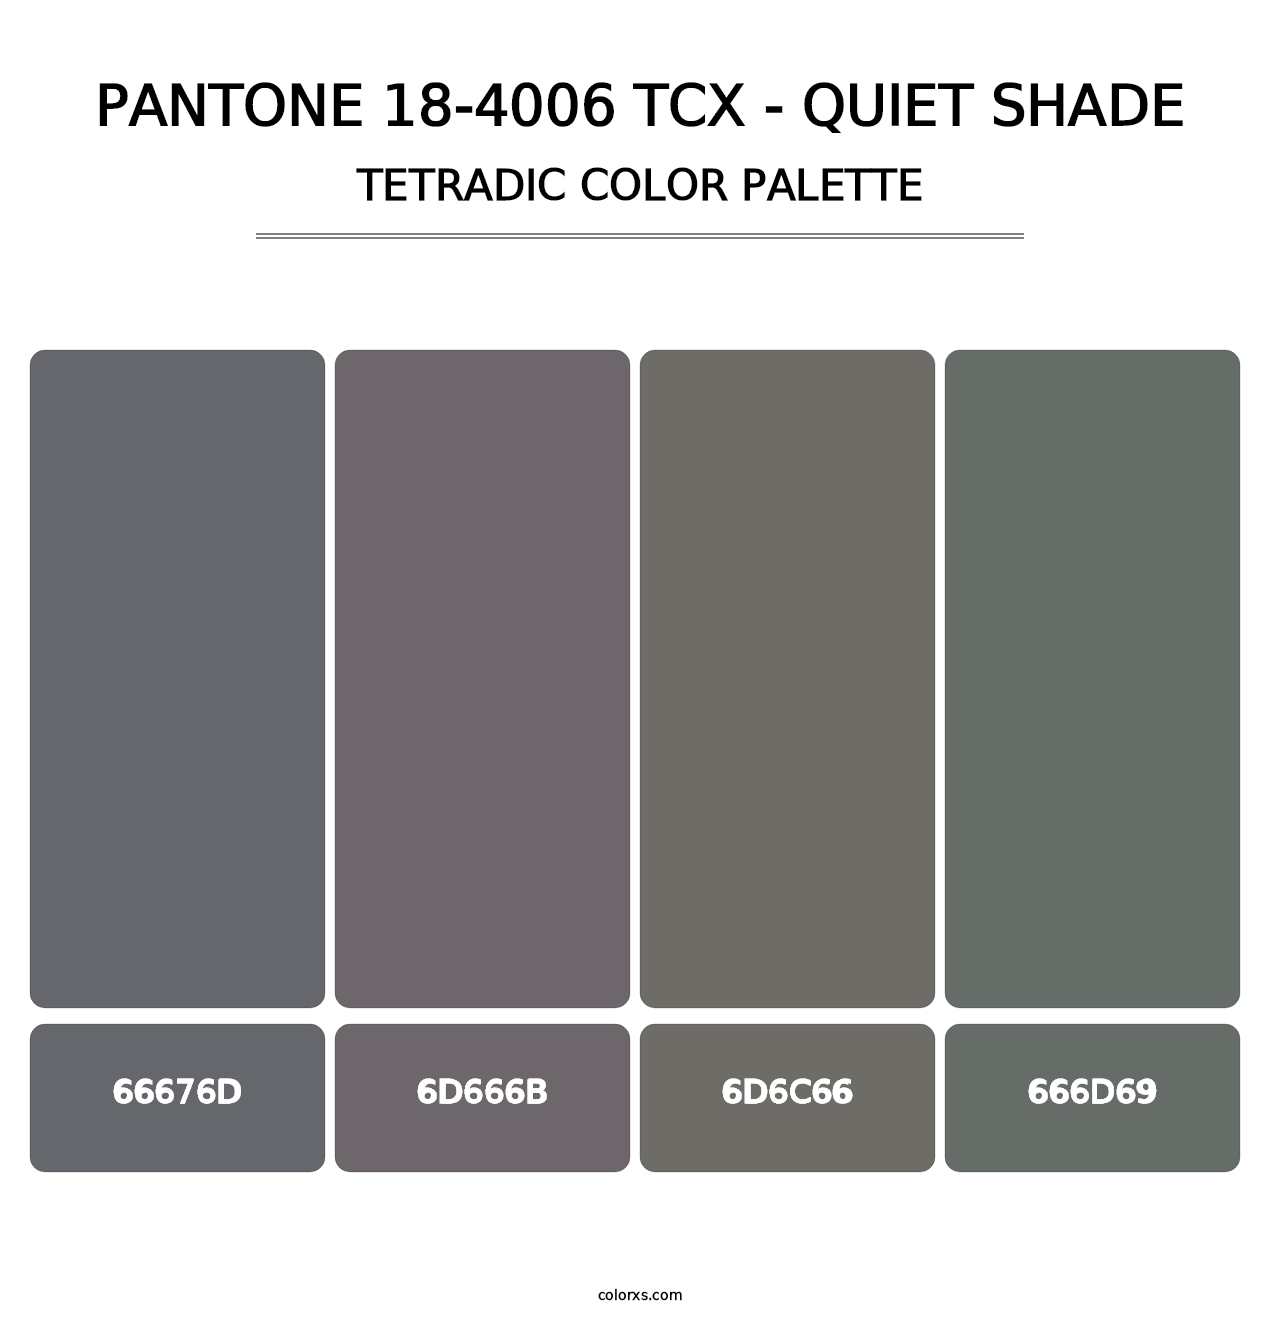 PANTONE 18-4006 TCX - Quiet Shade - Tetradic Color Palette